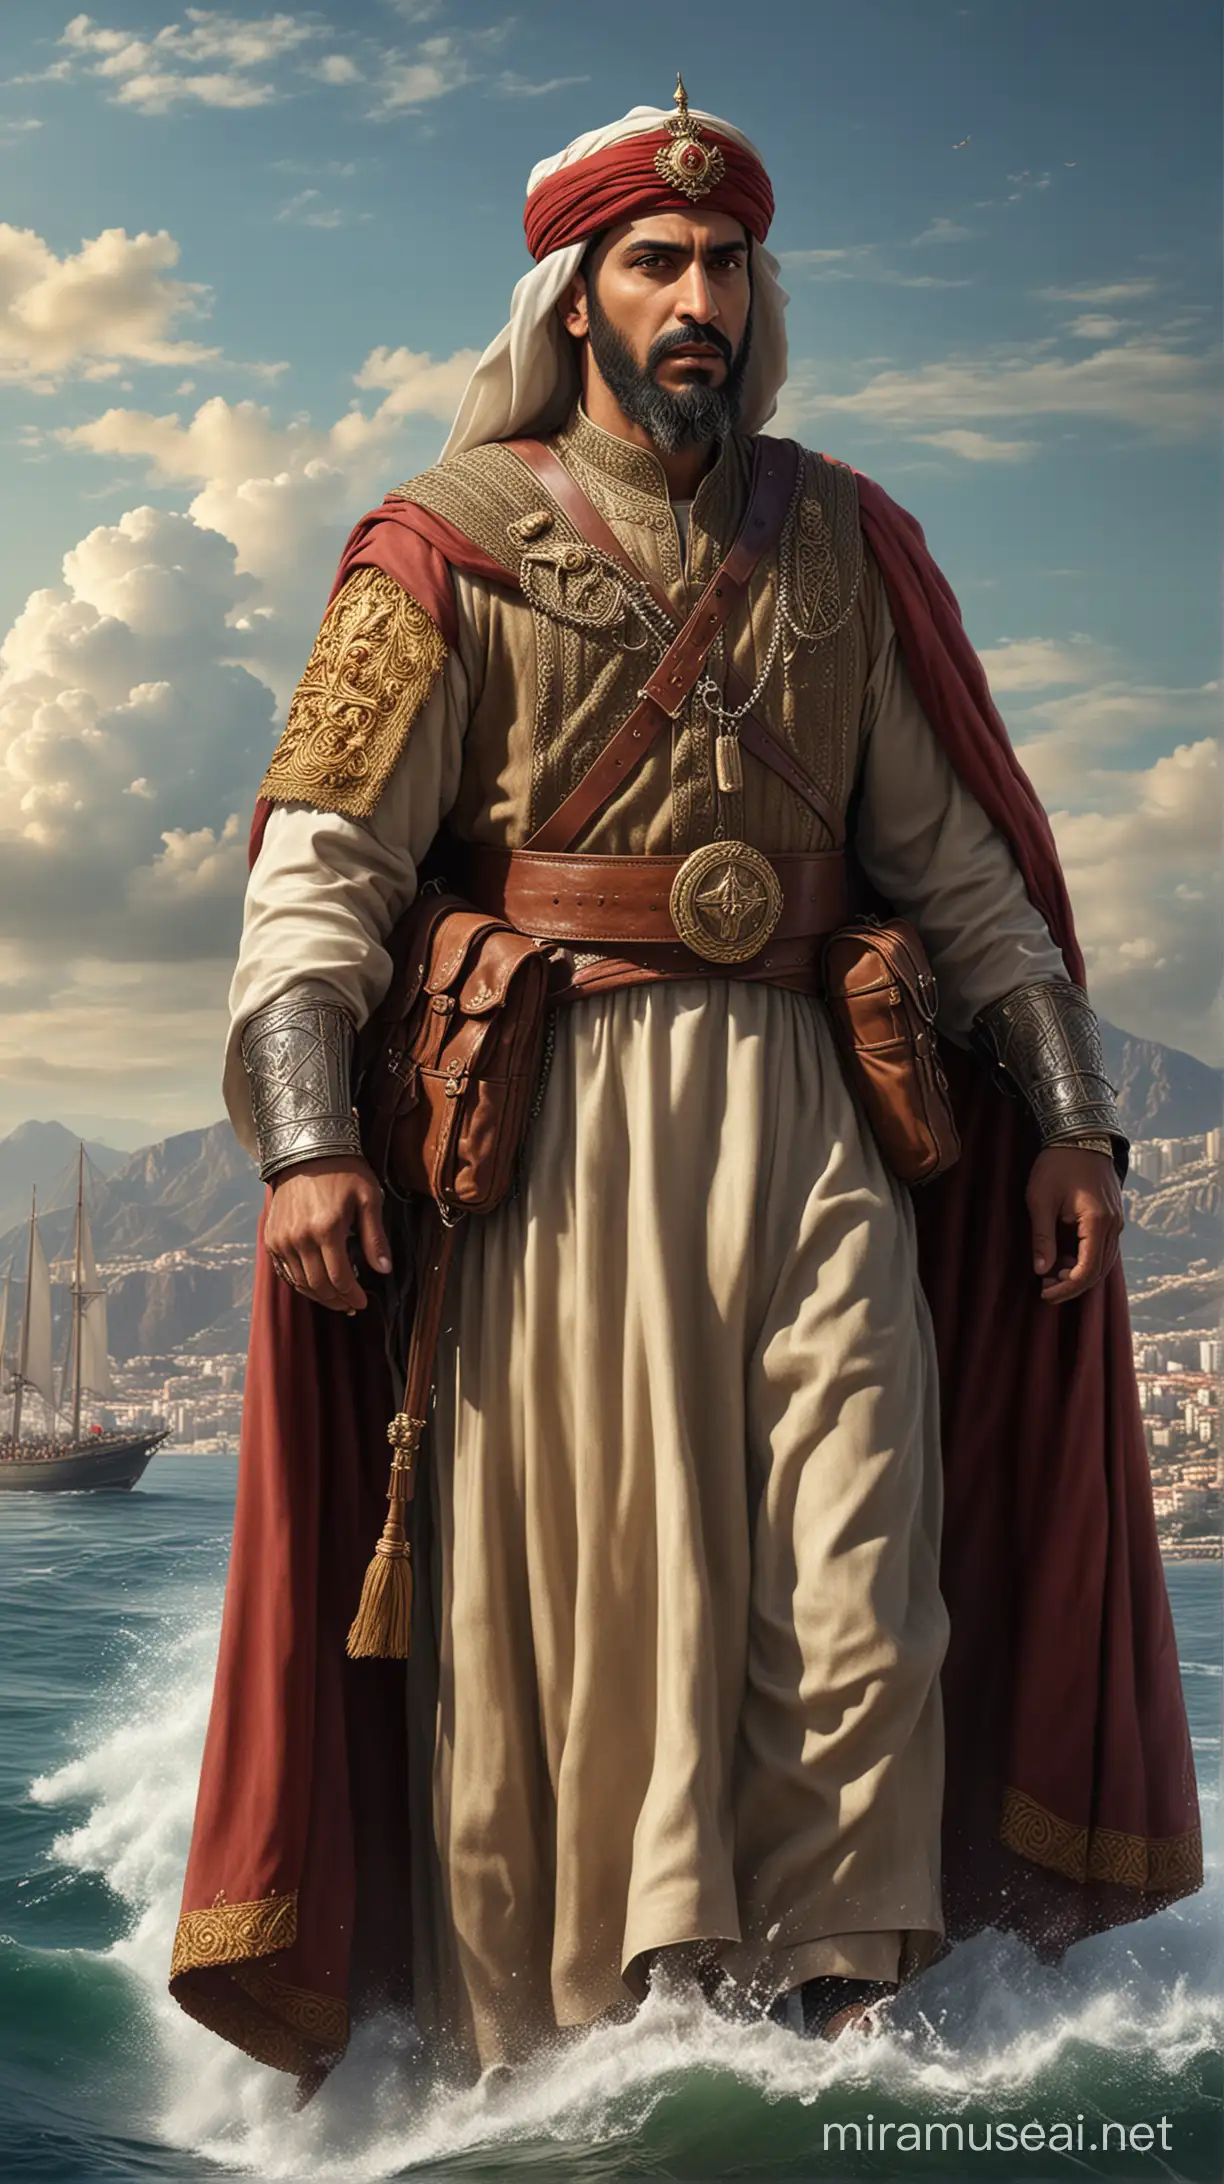 Tariq bin Ziyad Crossing the Strait of Gibraltar in Hyper Realistic Style